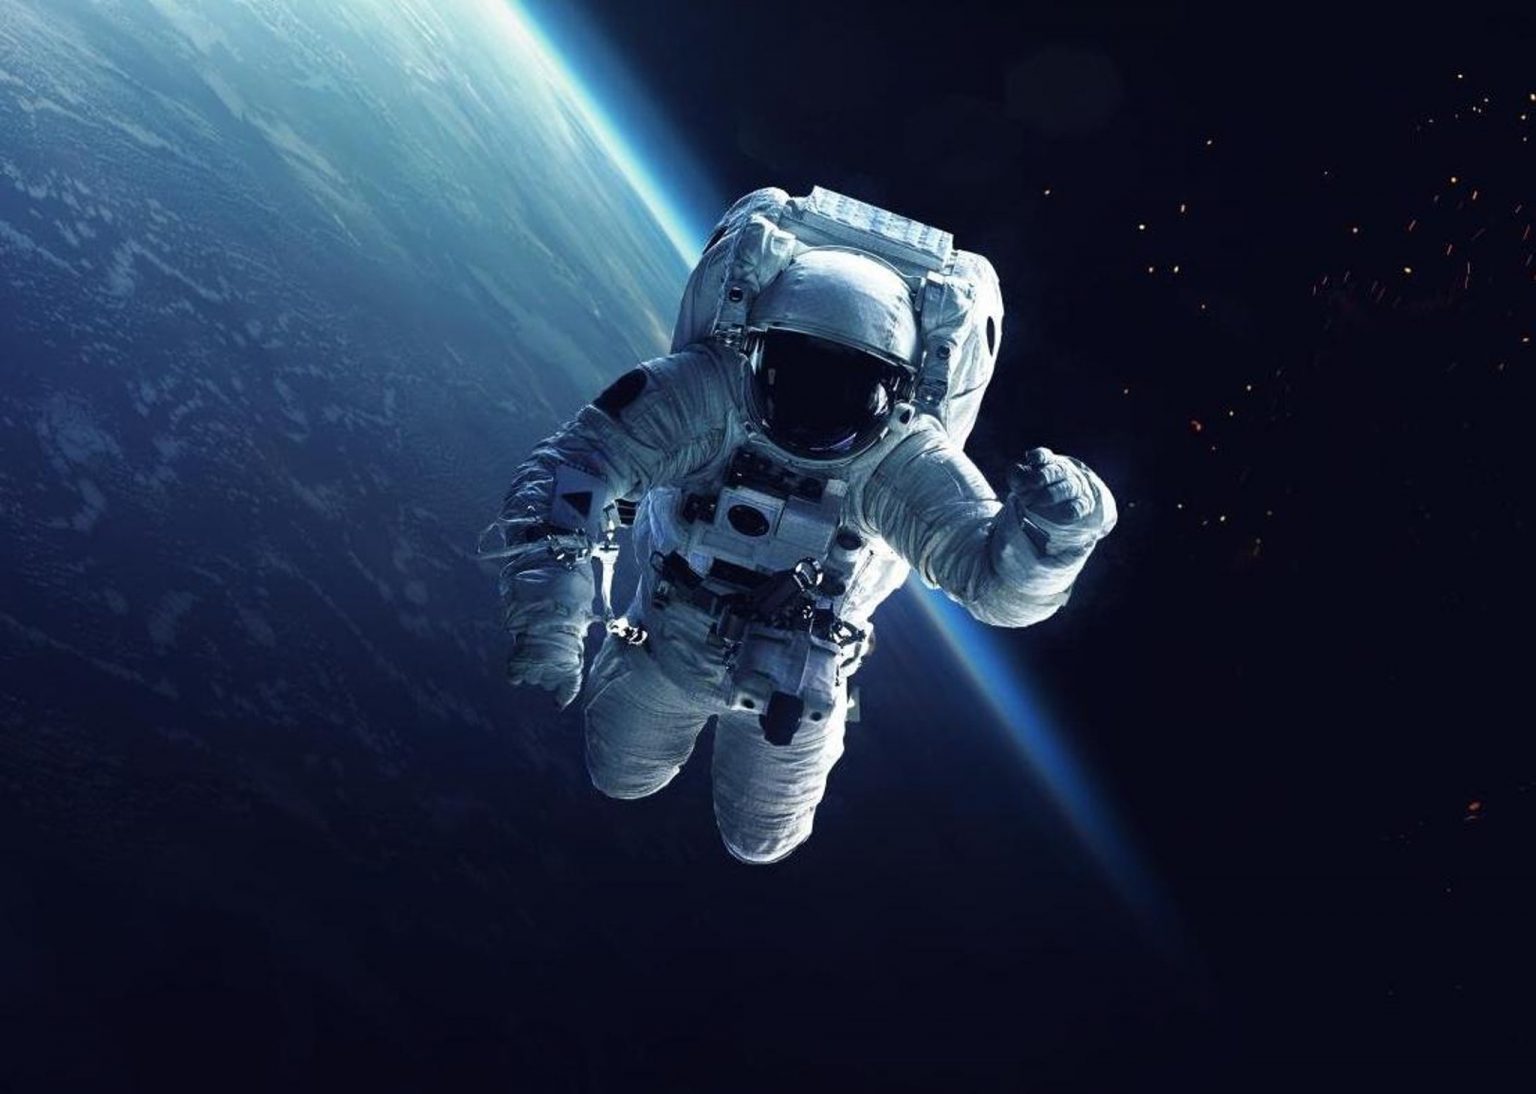 European Space Agency to hire first disabled astronaut| വികലാംഗനായ ആദ്യത്തെ ബഹിരാകാശയാത്രികനെ നിയമിക്കുന്നതിനുള്ള യൂറോപ്യൻ ബഹിരാകാശ ഏജൻസി_40.1